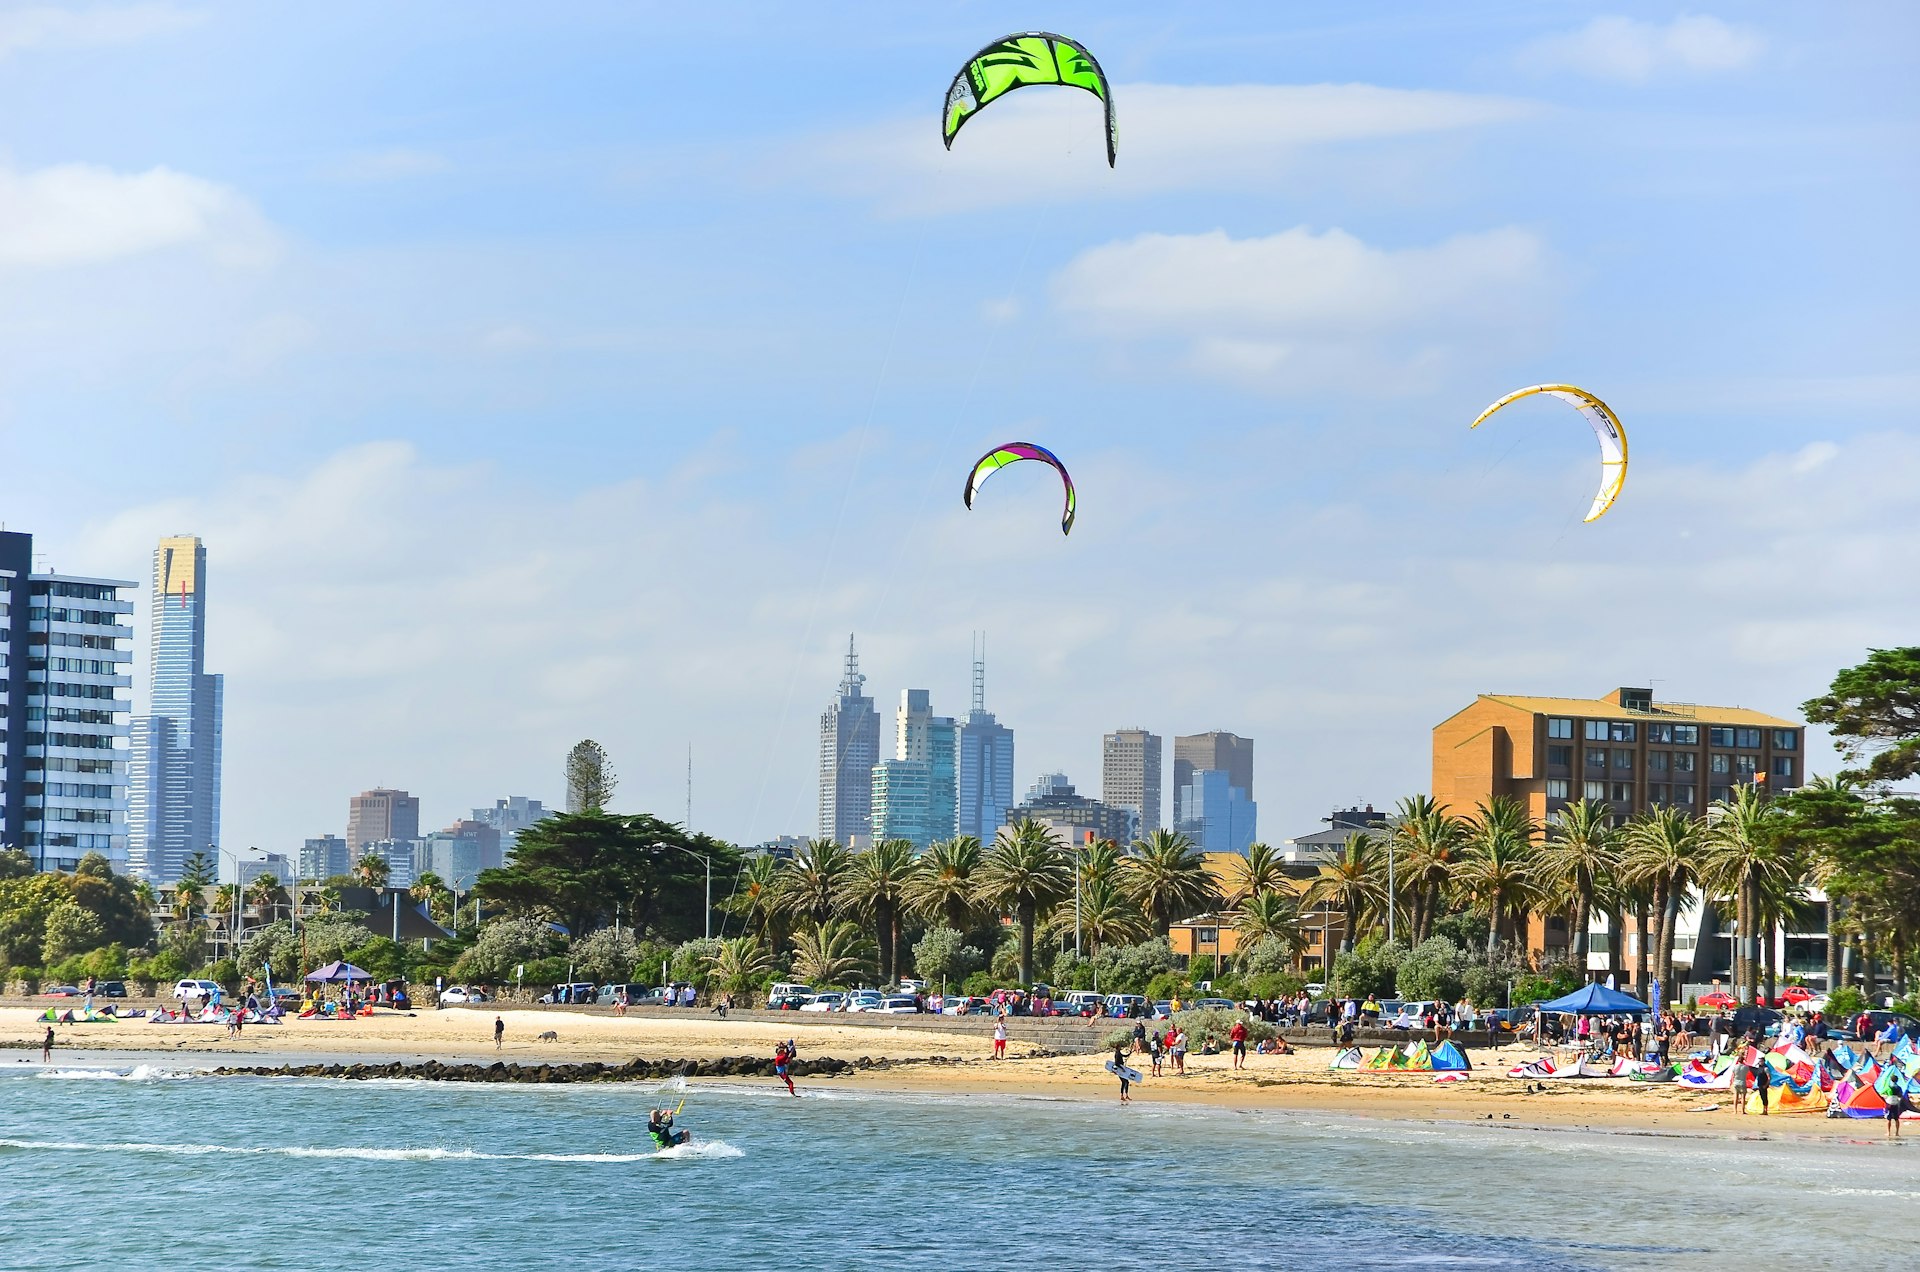 Kitesurfers ride the waves of a beach near a city on a sunny day